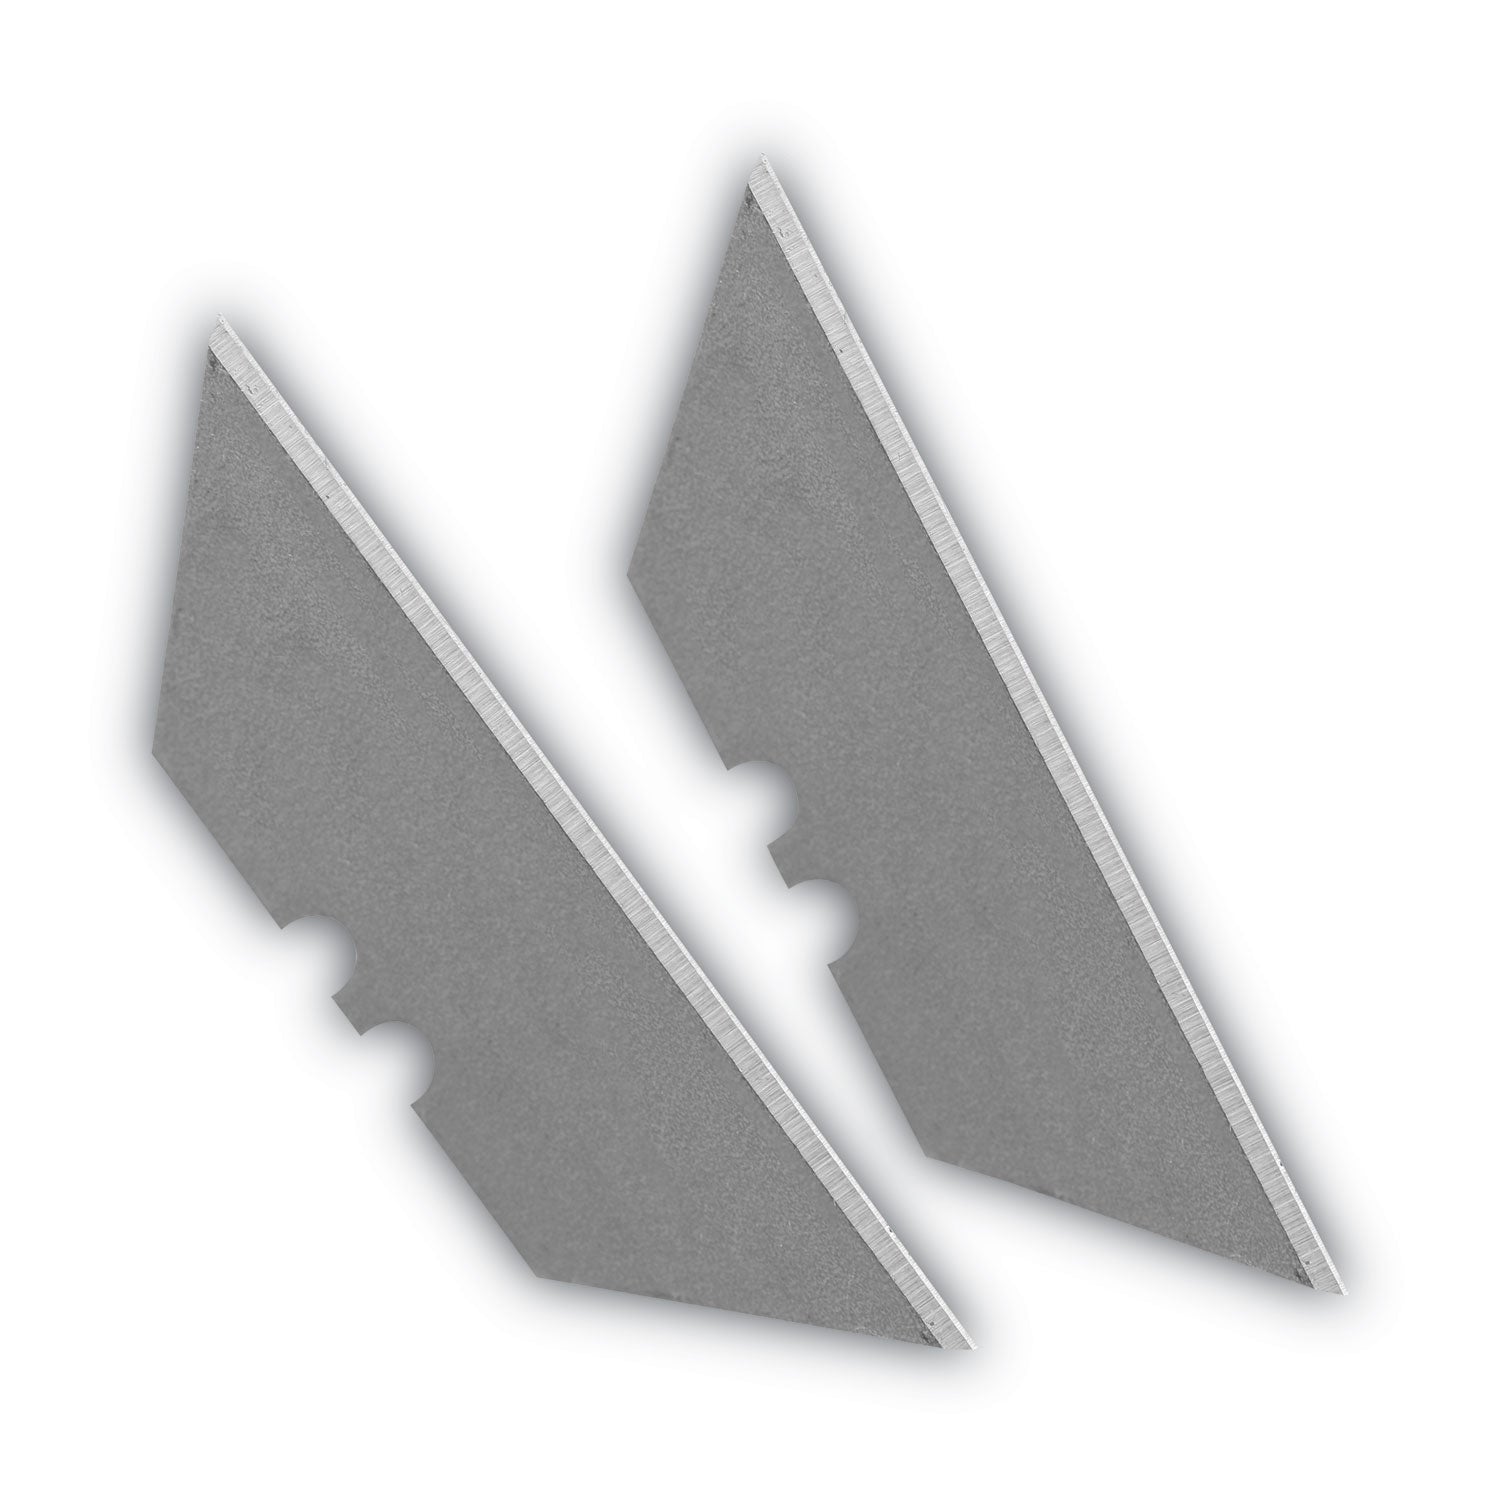 Heavy-Duty Utility Knife Blades, 10/Pack - 